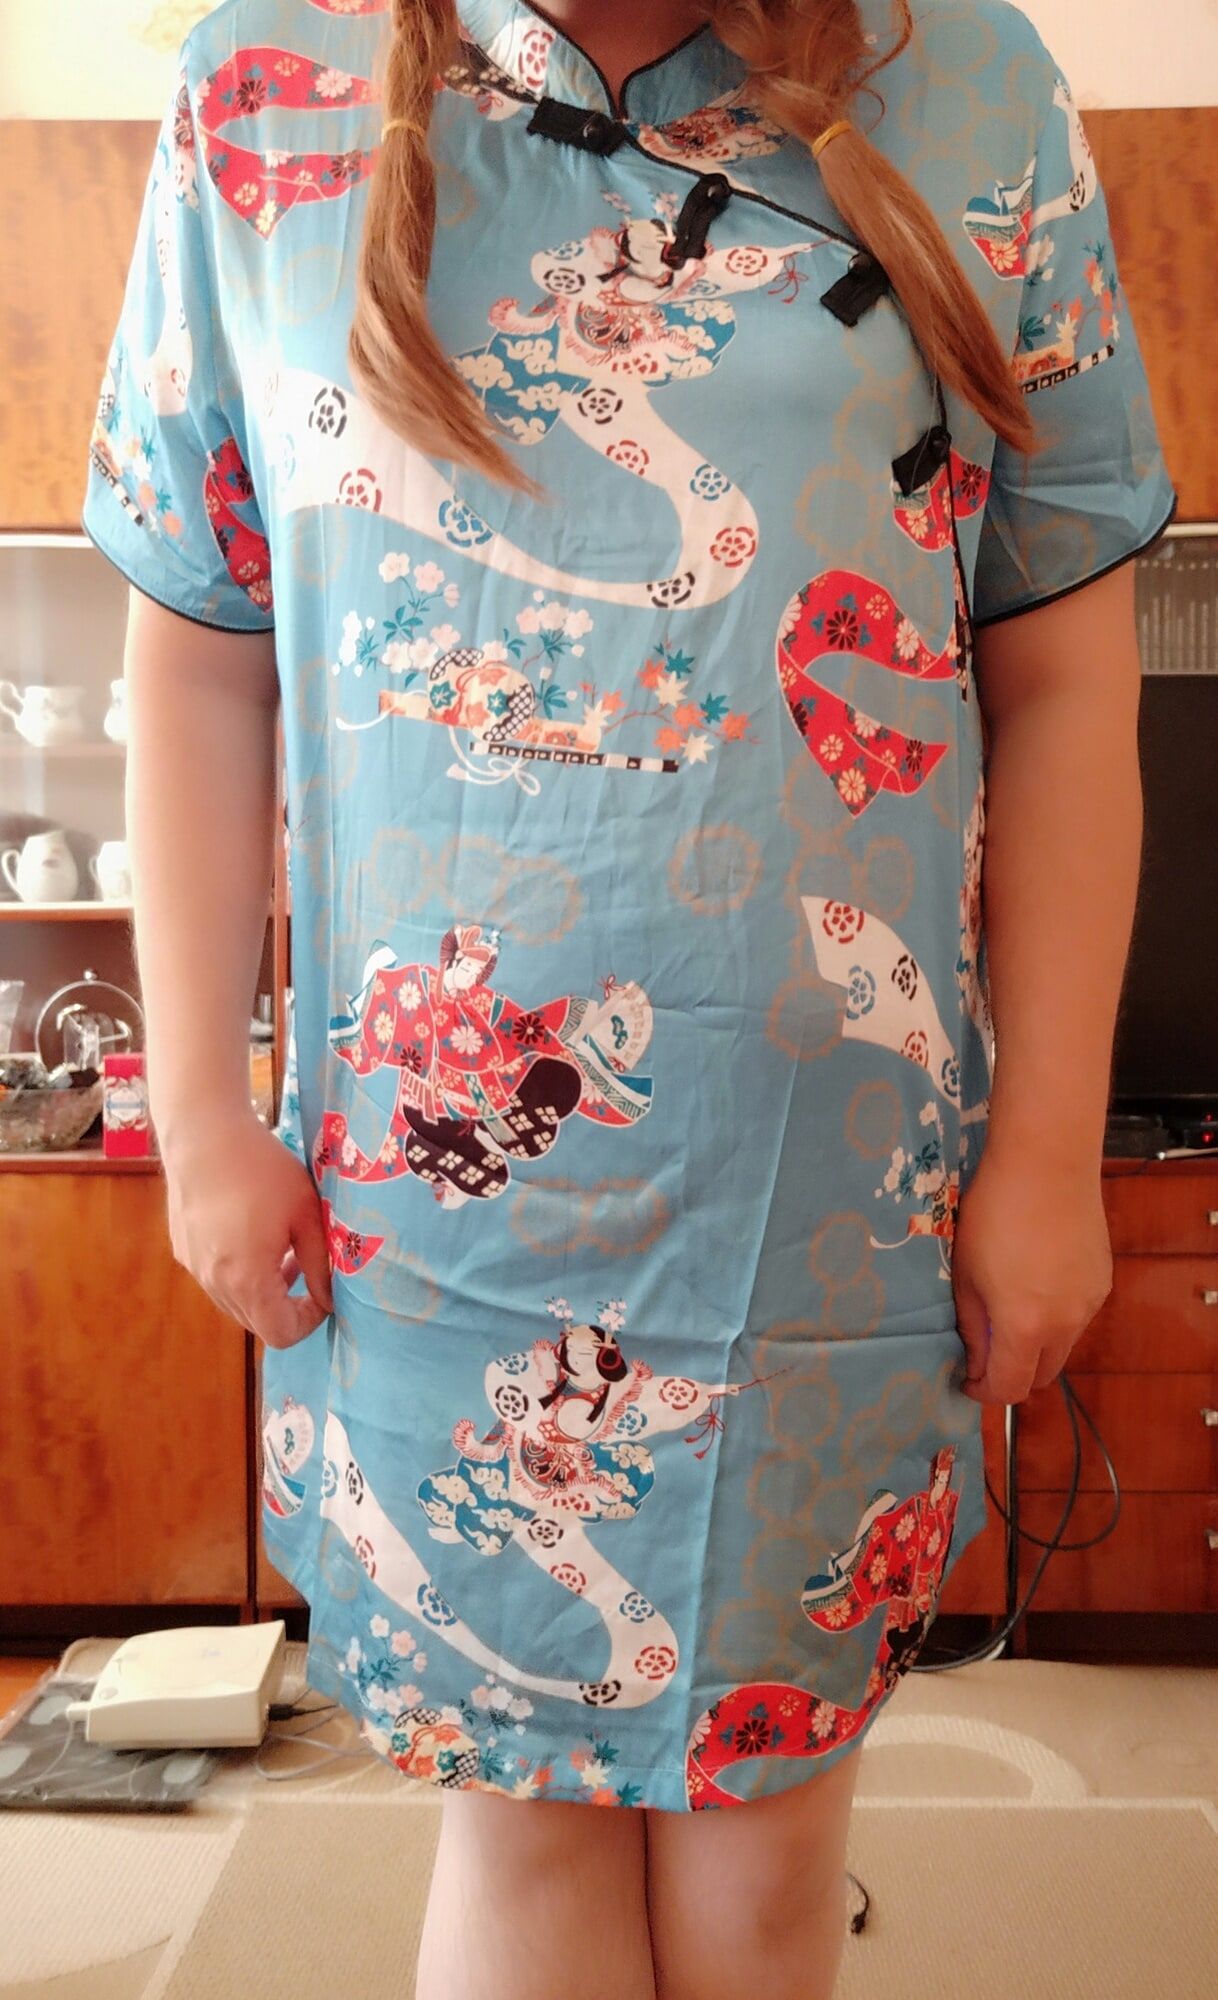 sissy Aleksa posing in new china dress & pink lingerie #45